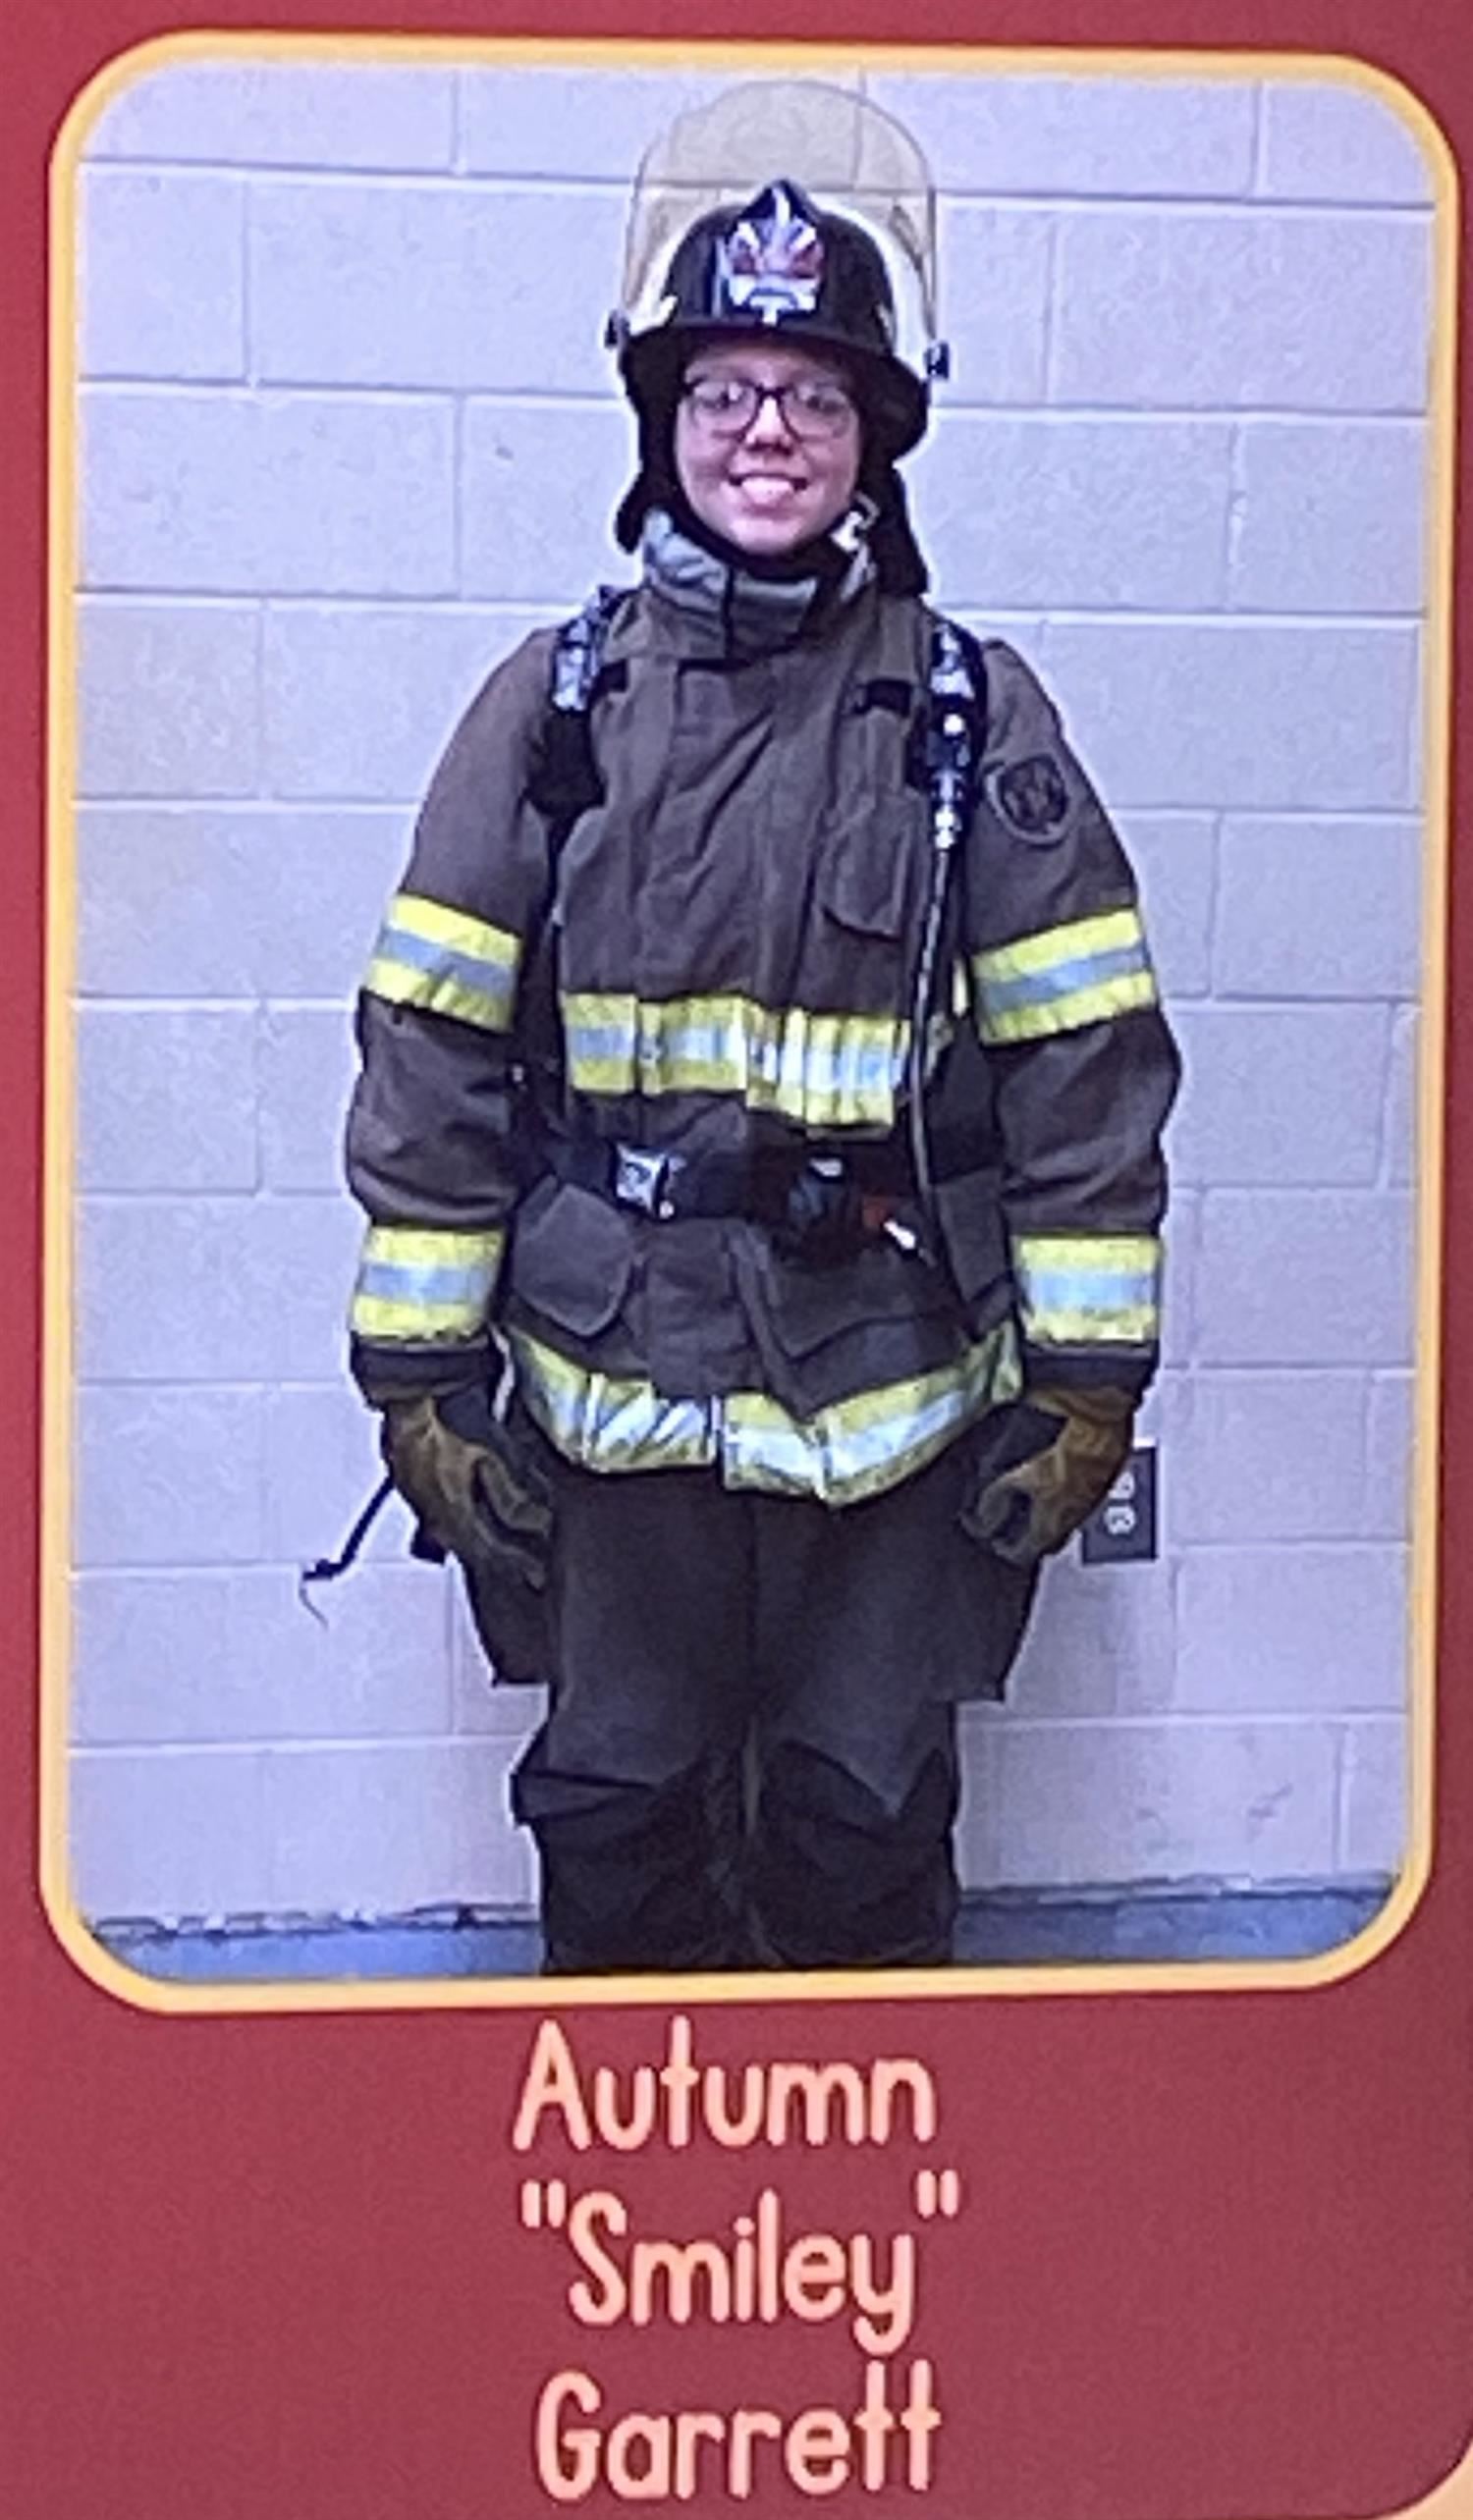  Picture of Autumn Garrett in firefighter uniform